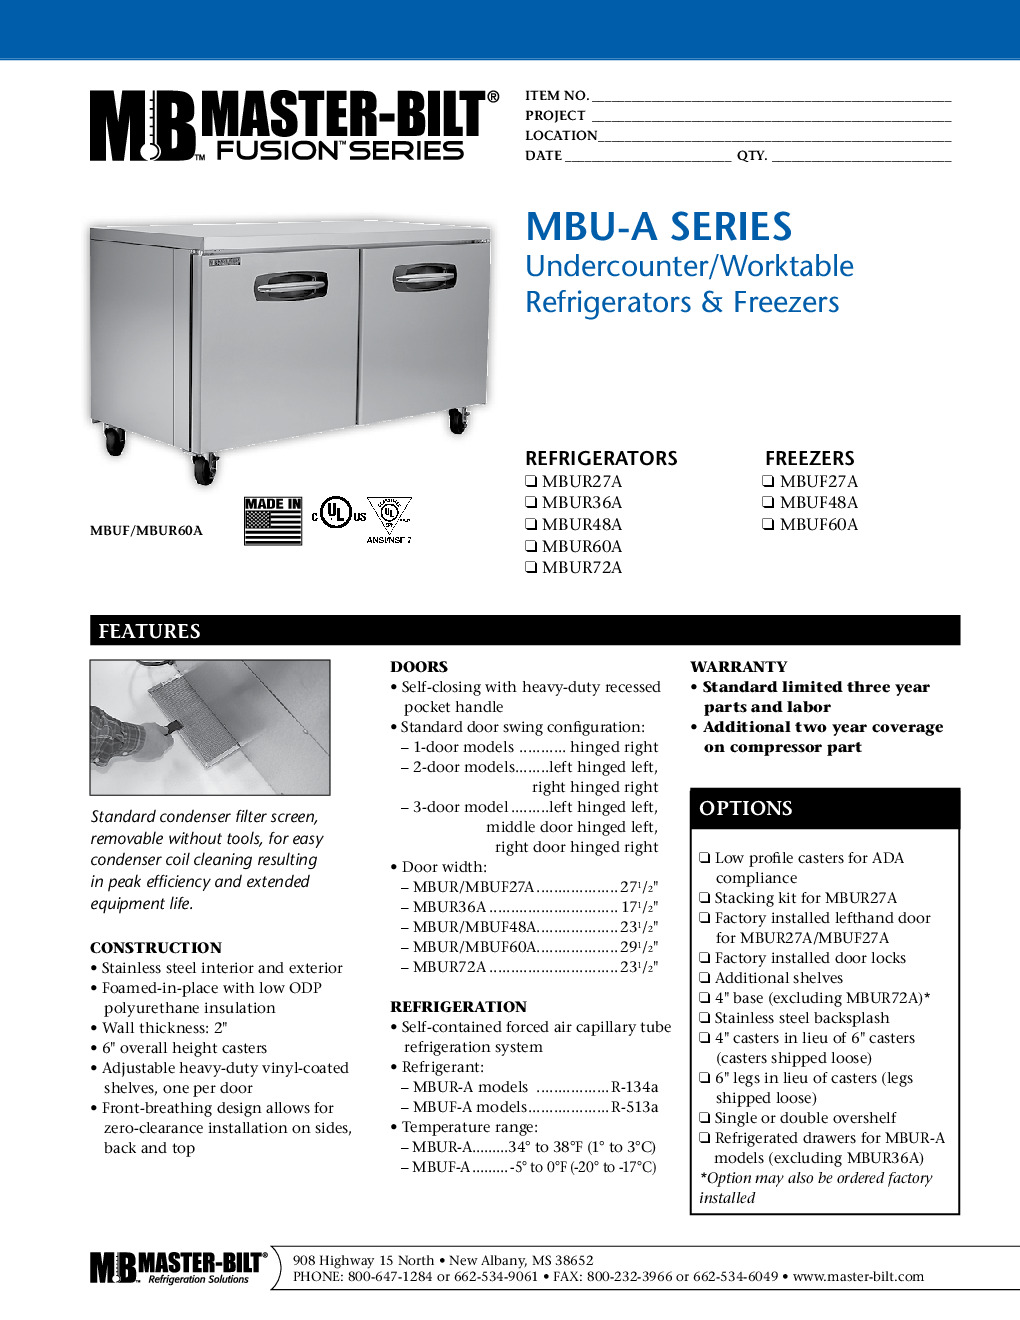 Master-Bilt MBUR72A-001 Reach-In Undercounter Refrigerator